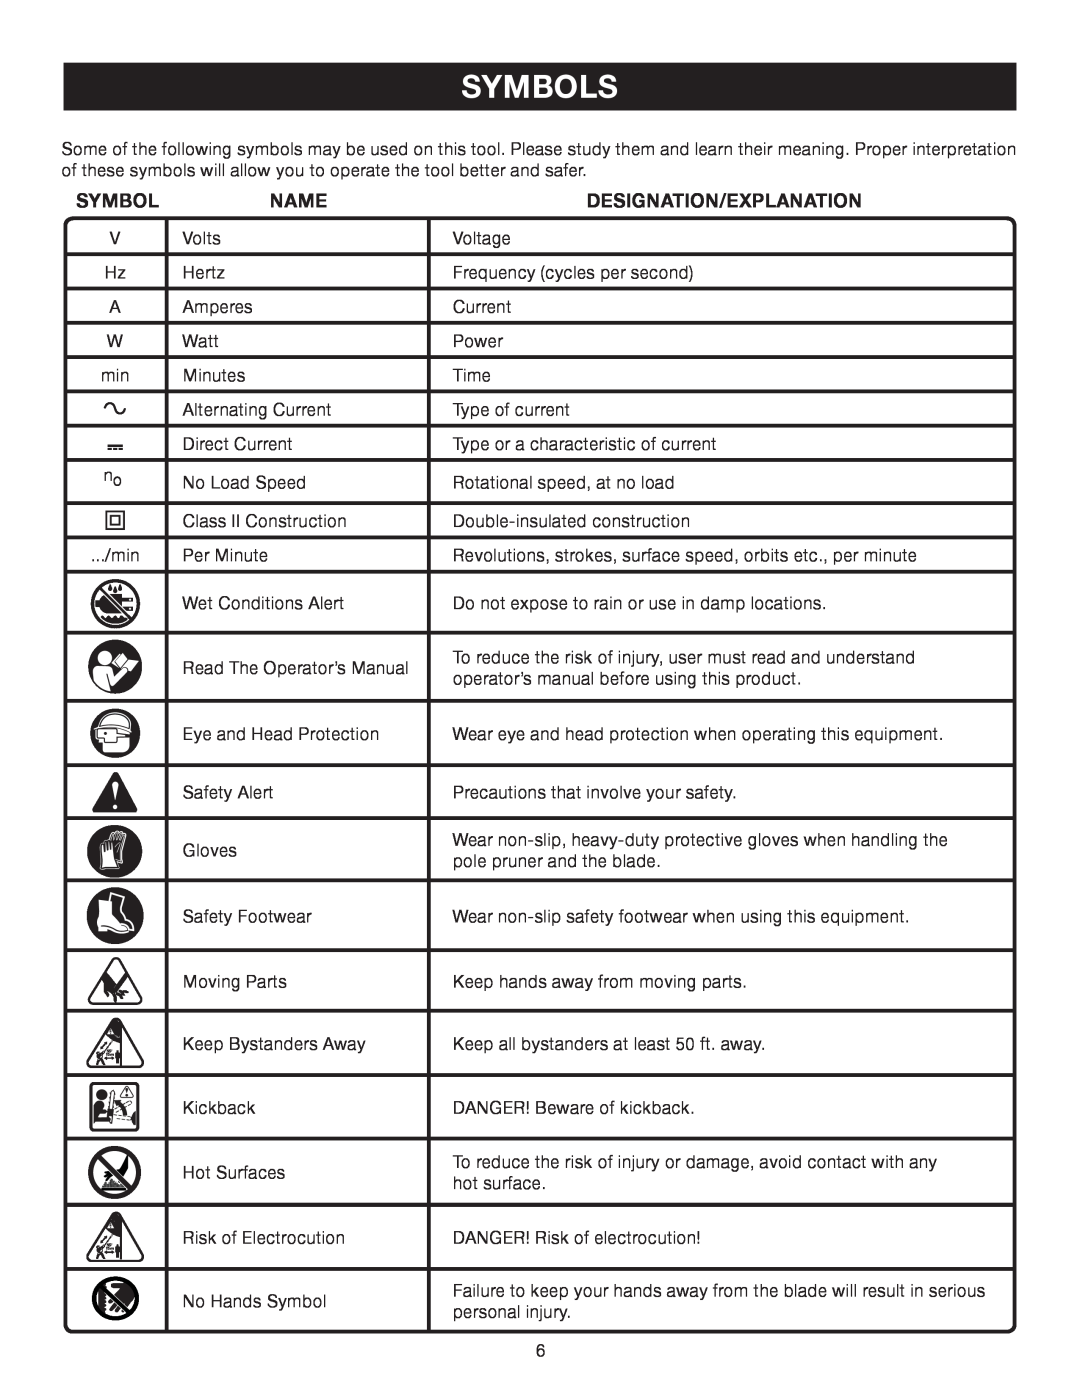 Ryobi P2500 manual Symbols, Name, Designation/Explanation 